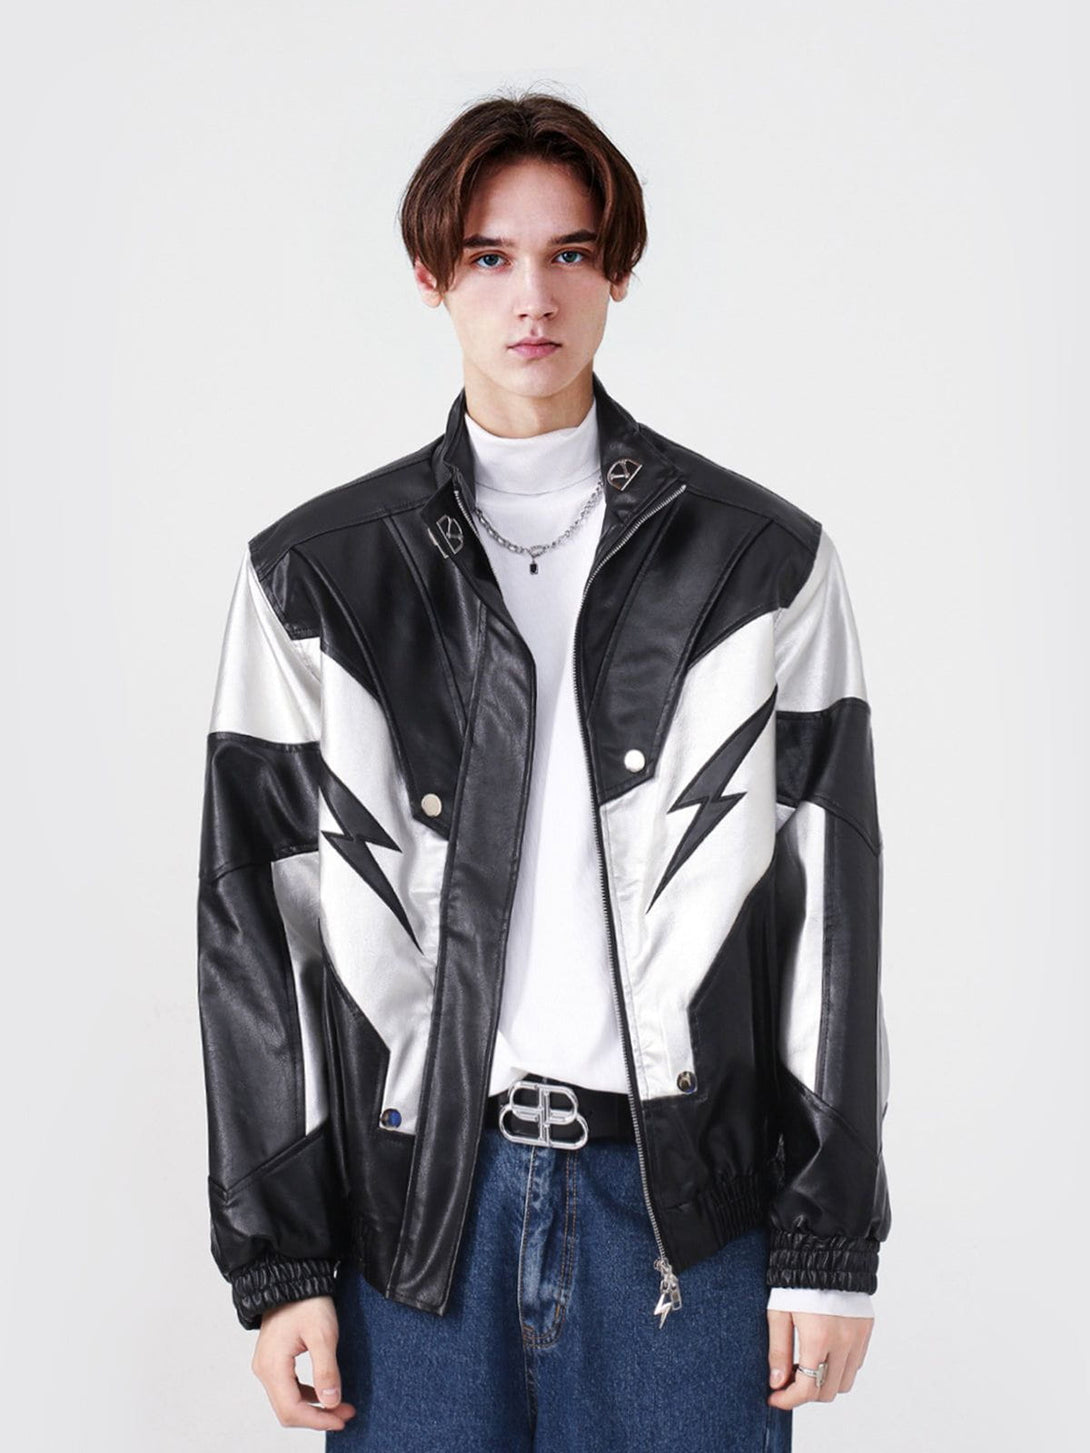 Levefly - Racing Contrast Panel Lightning Leather Jacket - Streetwear Fashion - levefly.com